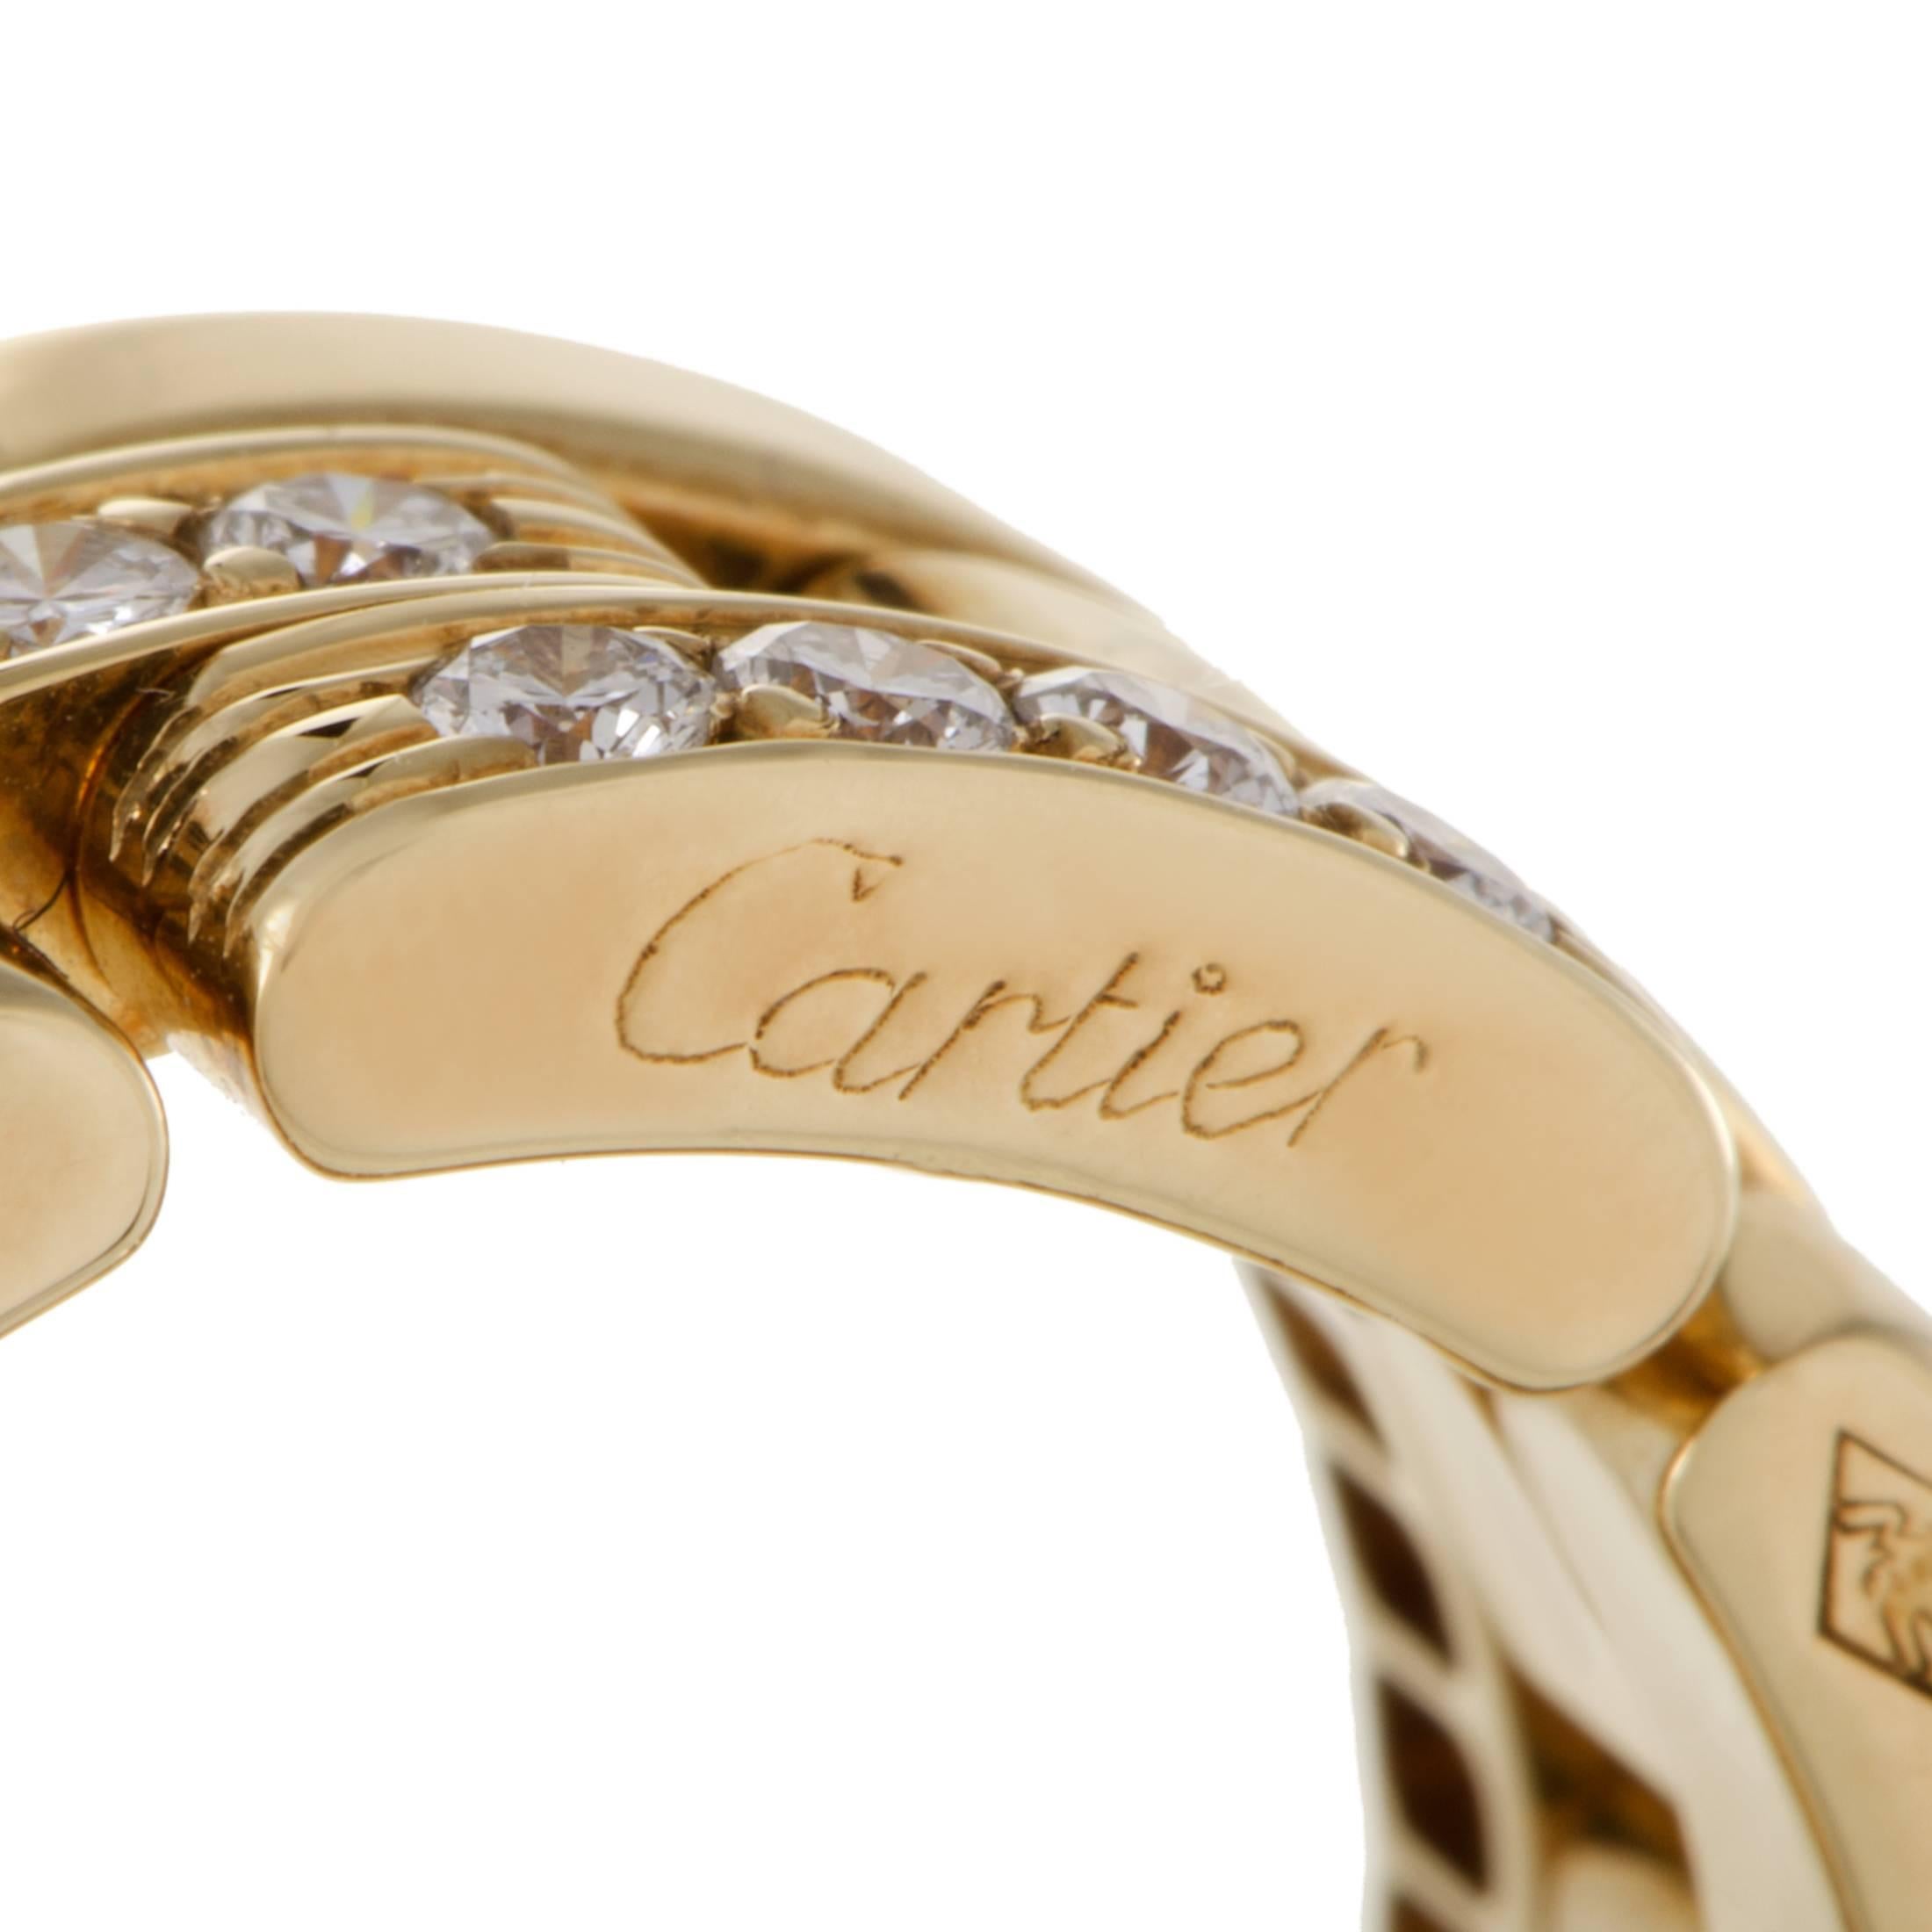 Cartier Maillon Panthere Women’s 18 Karat Yellow Gold Diamond Band Ring 1